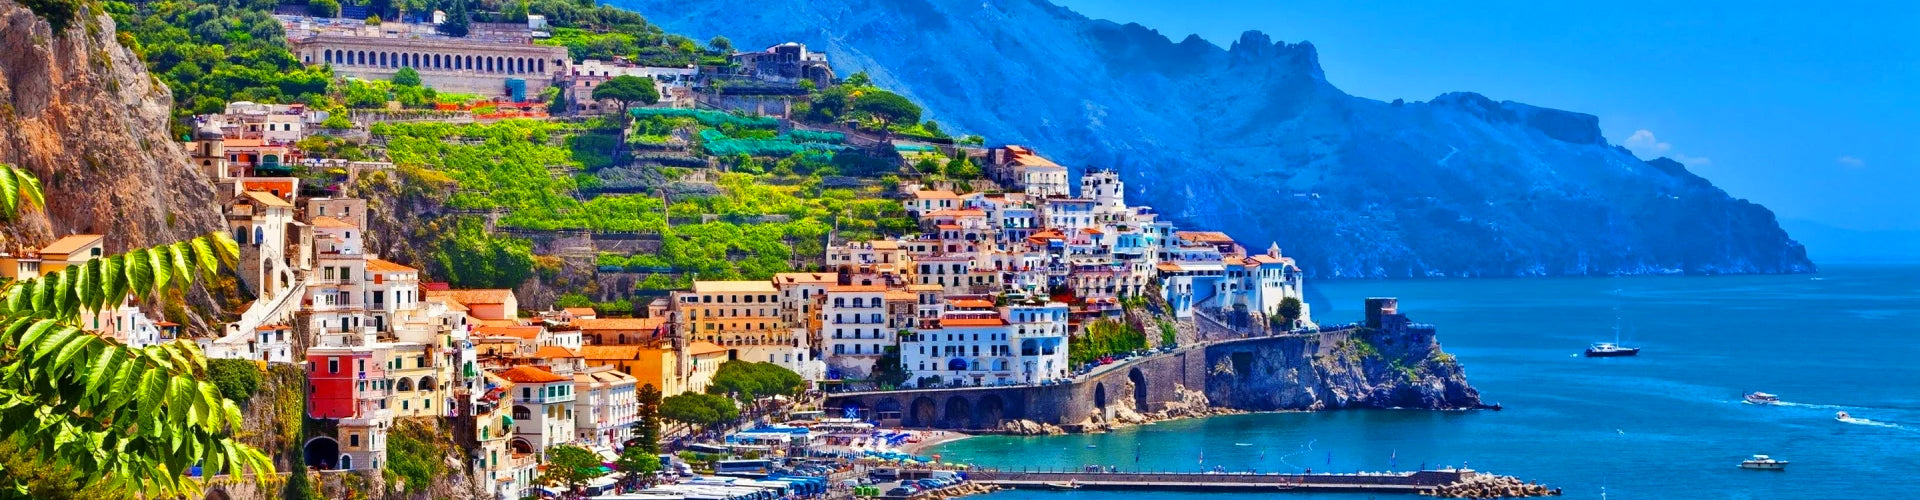 Southern Italy Coastline